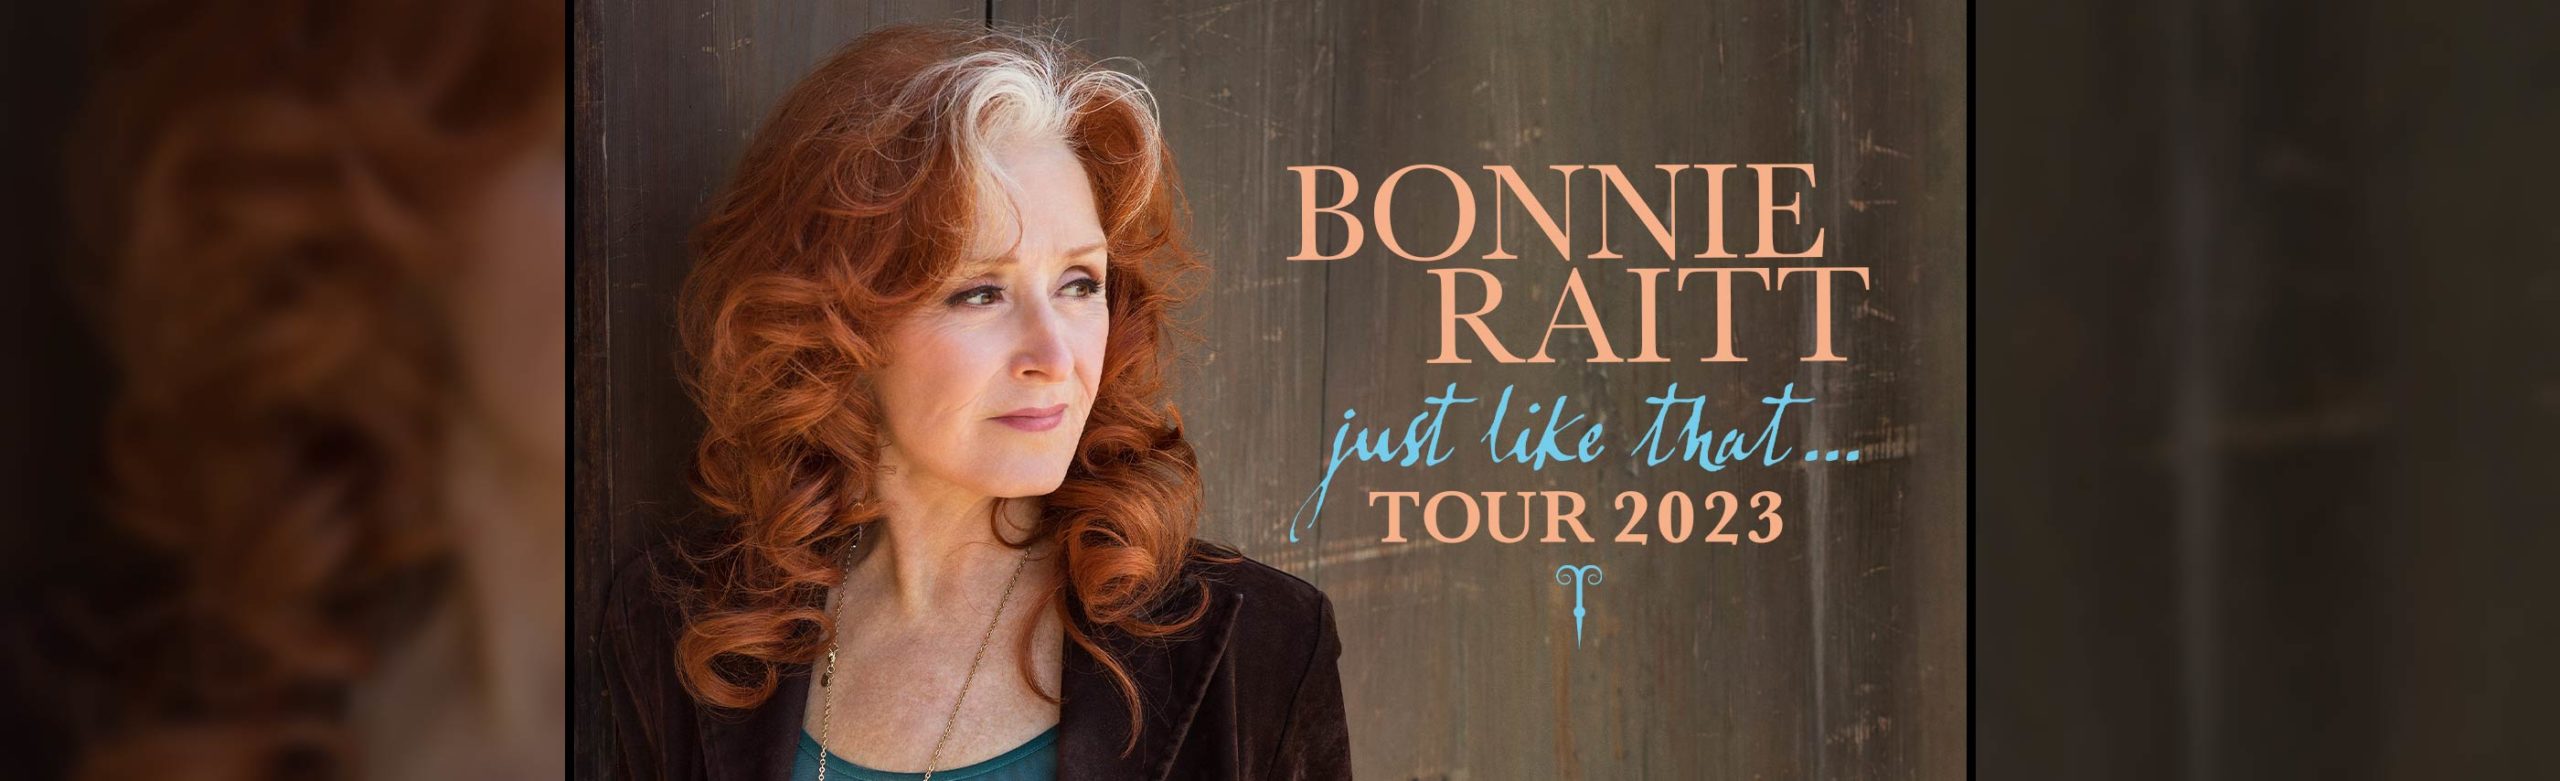 Bonnie Raitt Adds Concert at KettleHouse Amphitheater to ‘Just Like That…’ Tour Image